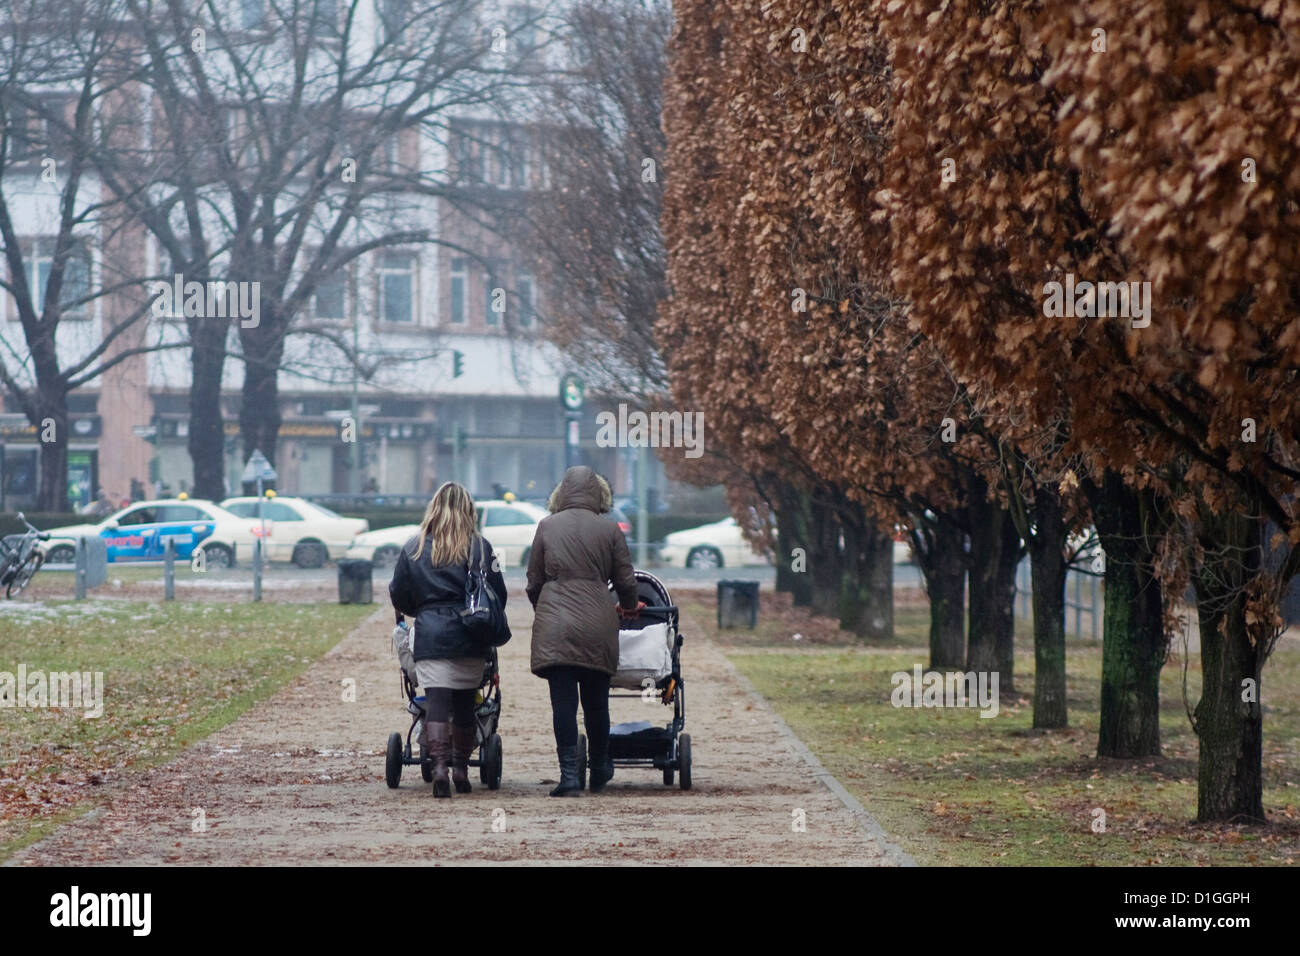 Zwei Frauen schieben Kinderwagen in das graue Winterwetter in Berlin-Kreuzberg, Deutschland, 19. Dezember 2012. Foto: Inga Kjer Stockfoto